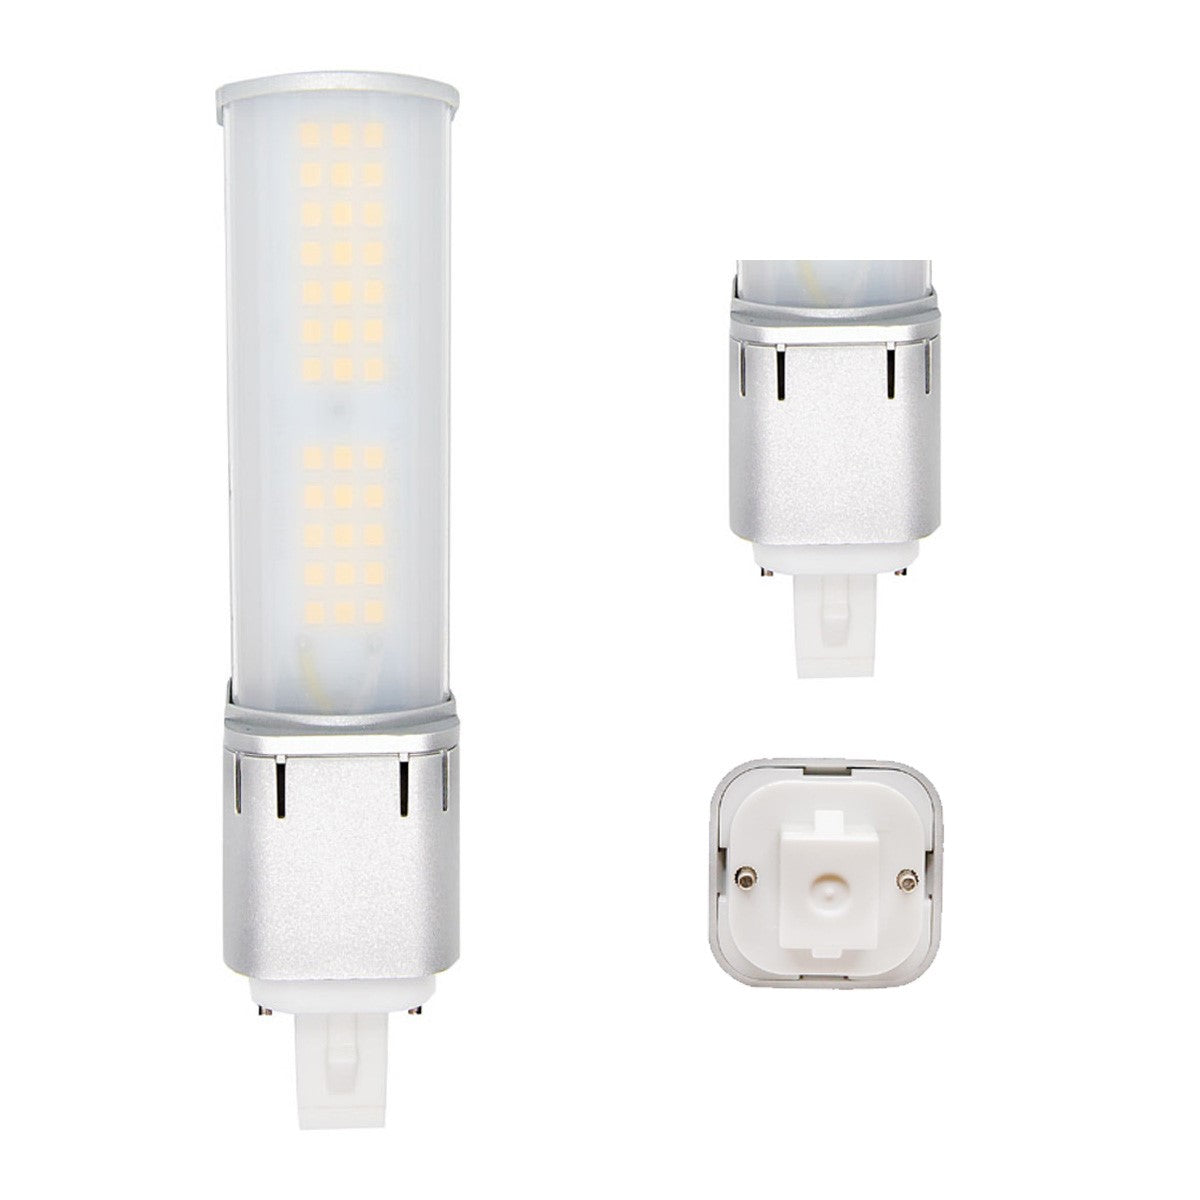 2 pin PL LED Bulb, 7 Watt 910 Lumens, 4000K, Horizontal, Replaces 13W CFL, G23 Base, Direct Or Bypass